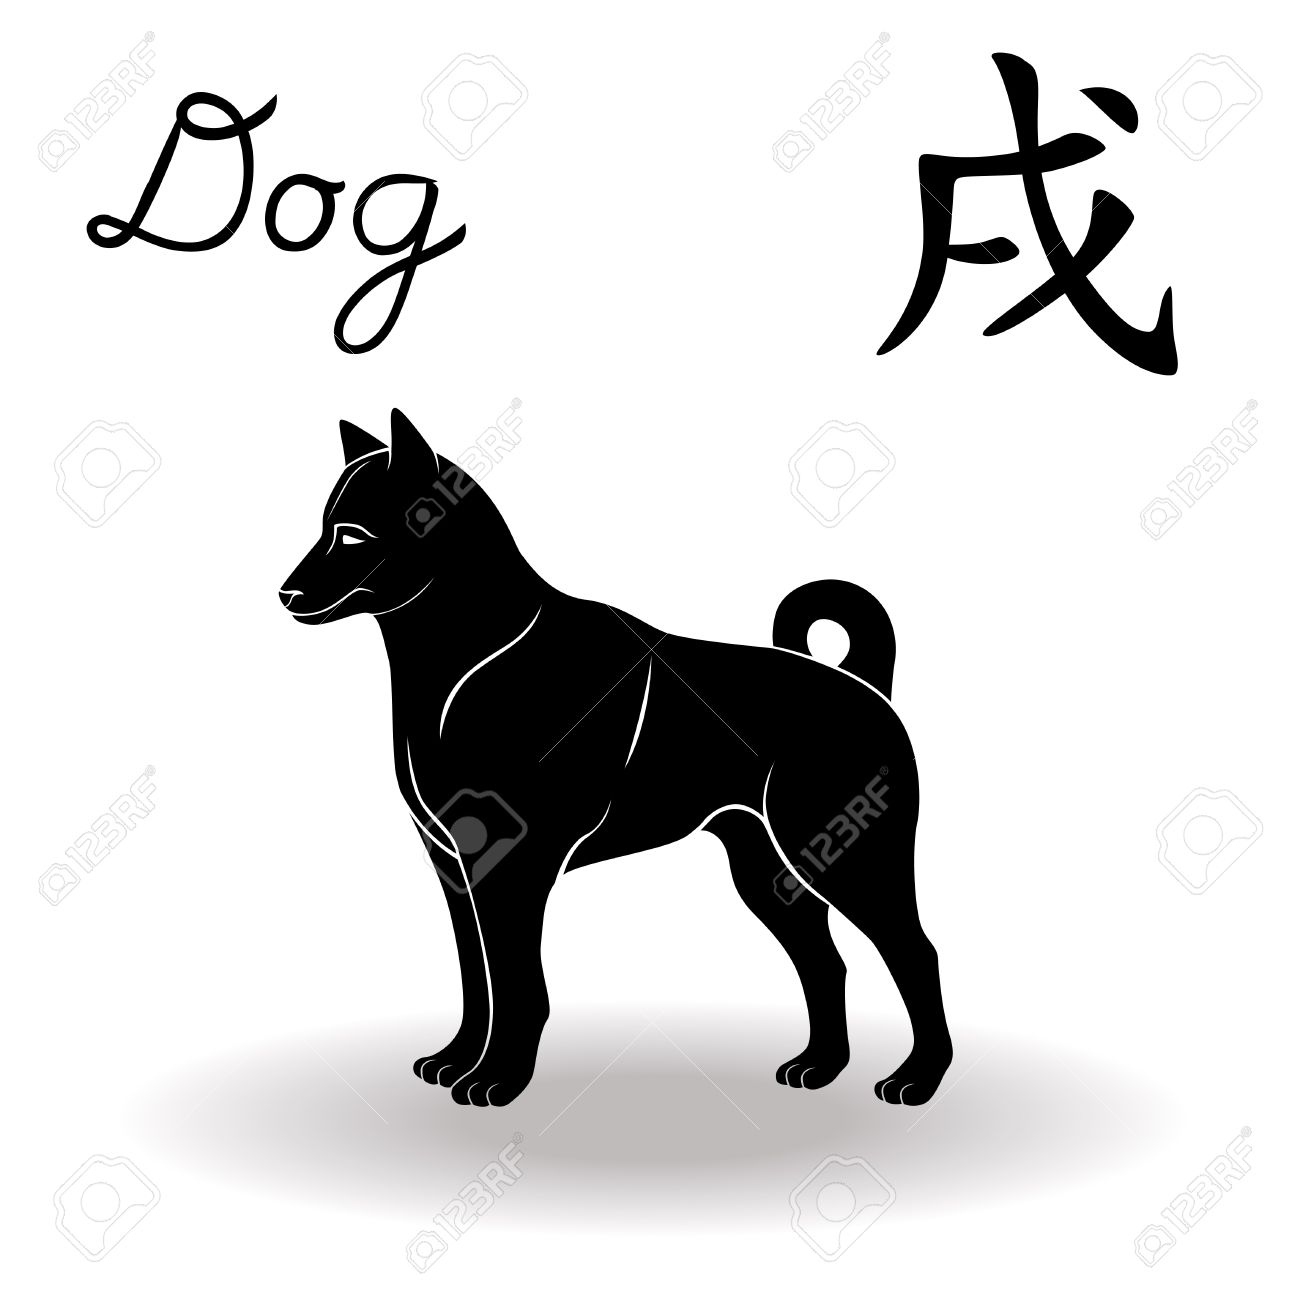 Chinese Zodiac Sign Dog, Fixed Element Earth, Symbol Of New Year Chinese Zodiac Calendar Dog